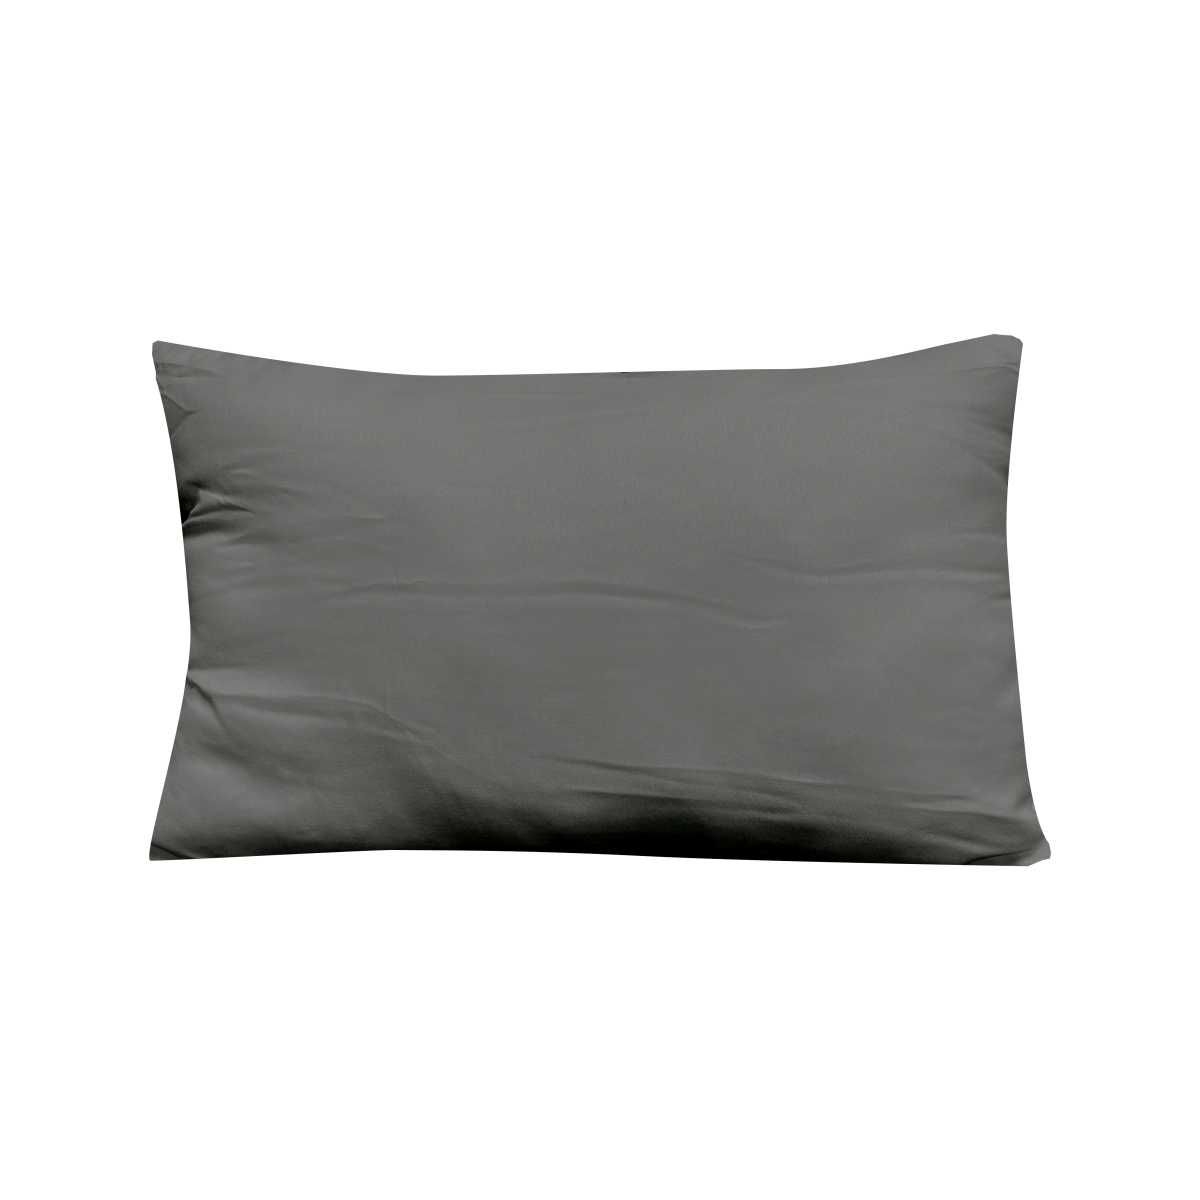 Disc-O-Bed Pillow Kissen grau  - 50008